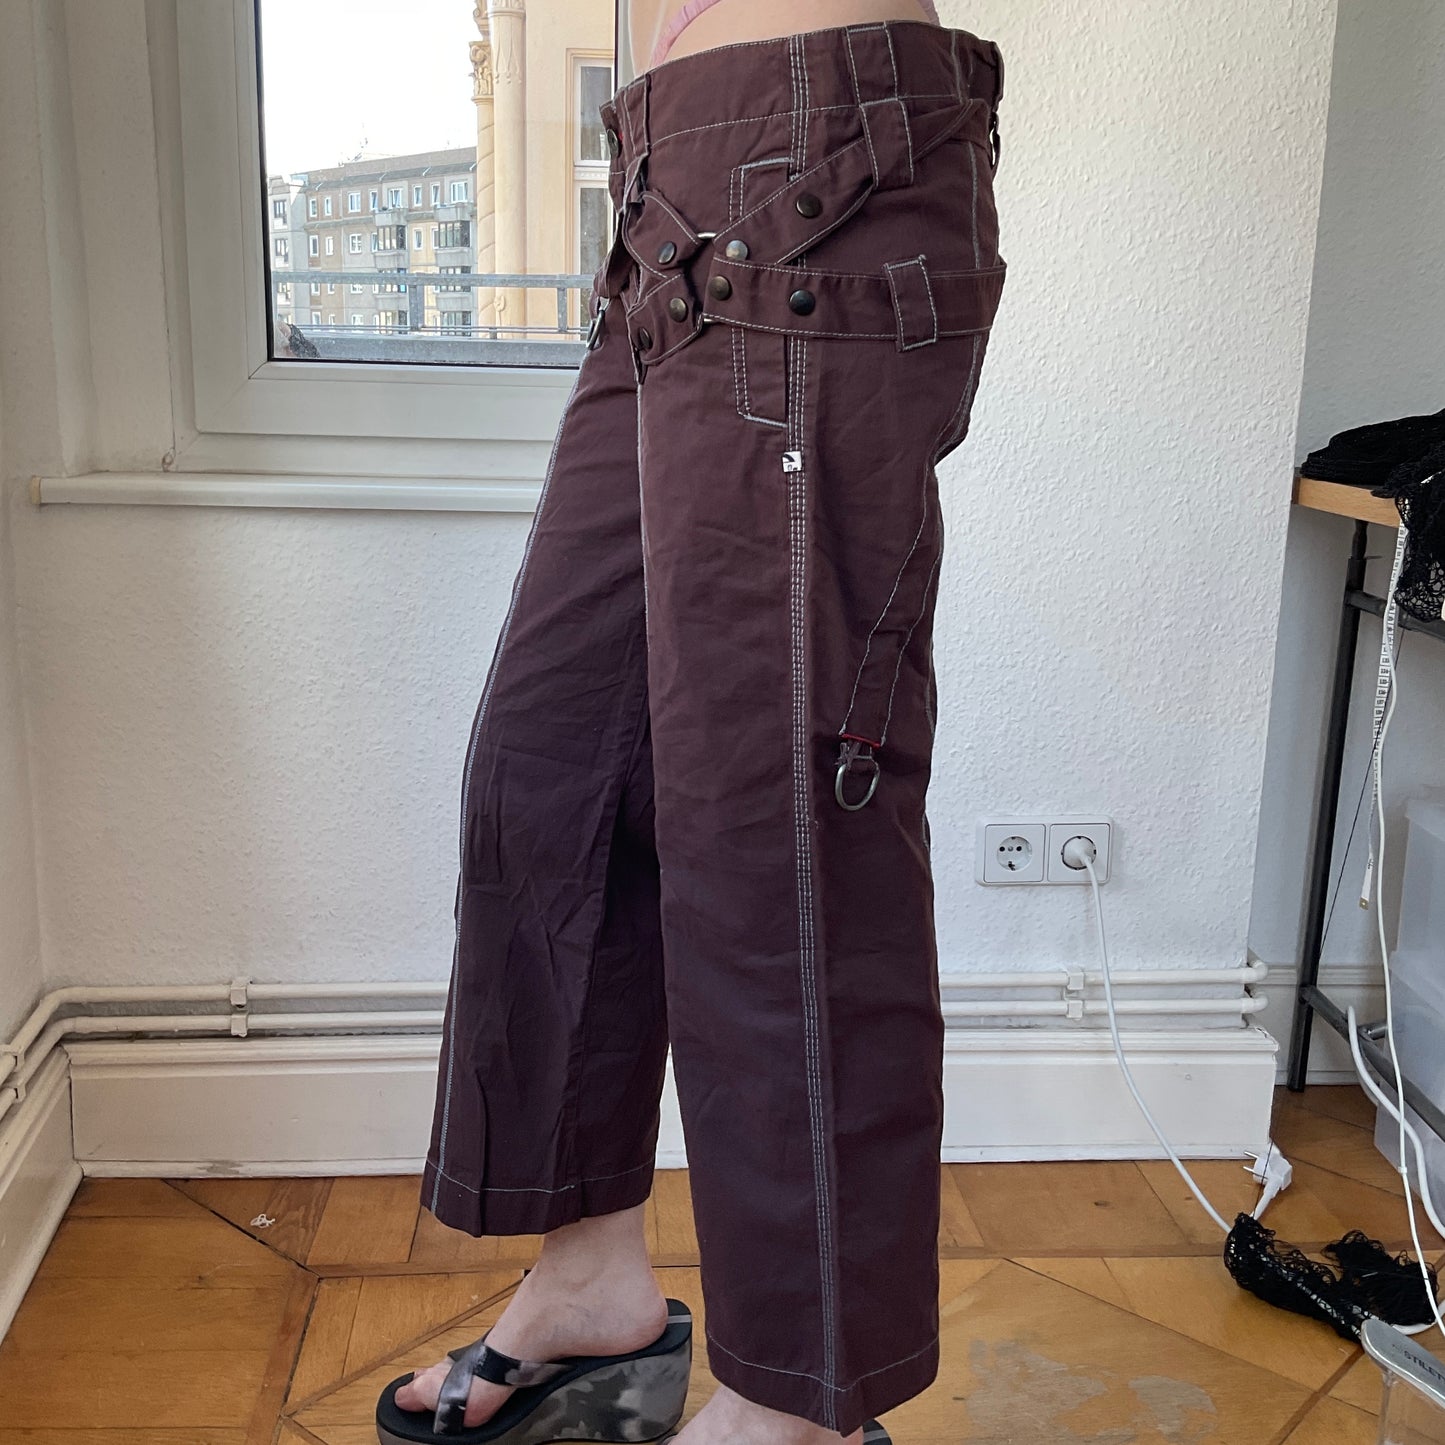 Purple pants with strings